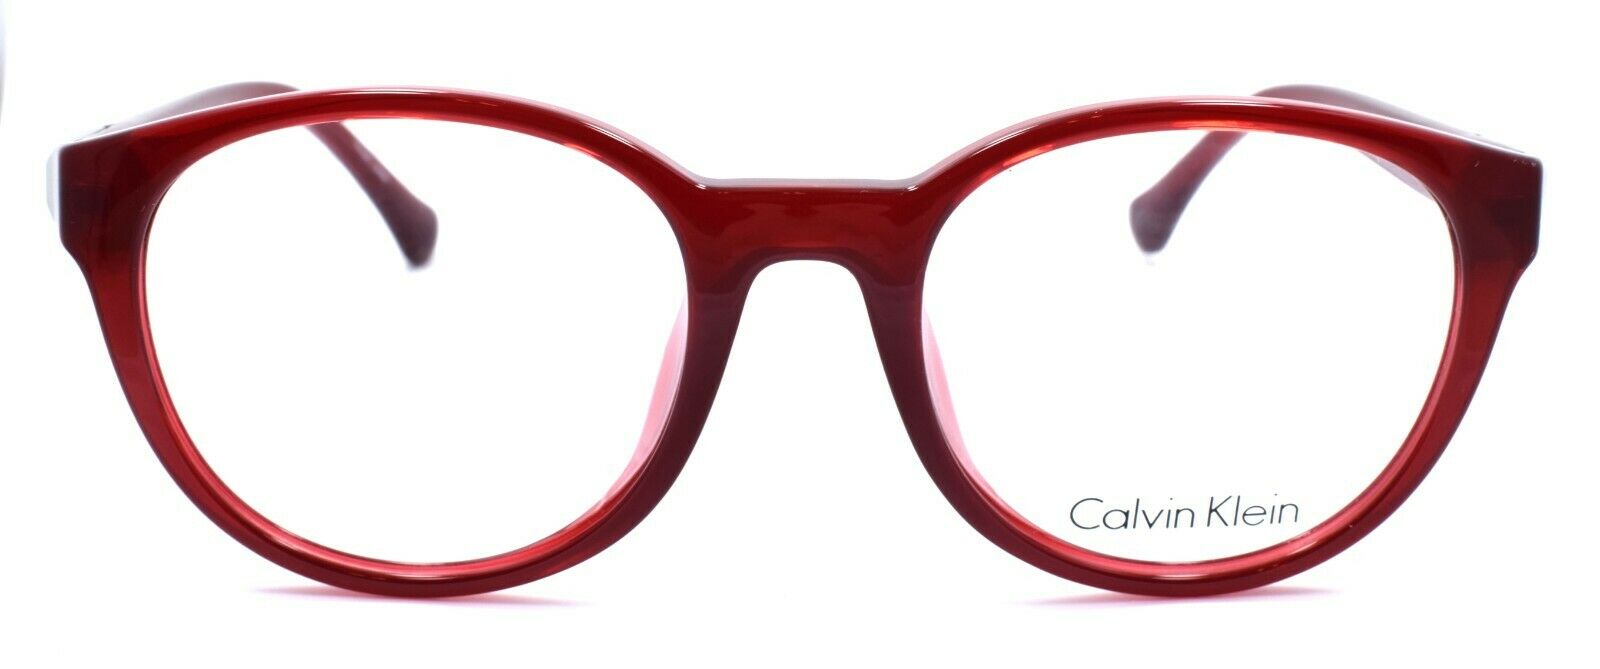 2-Calvin Klein CK5892 615 Women's Eyeglasses Frames 50-19-140 Red-750779085141-IKSpecs